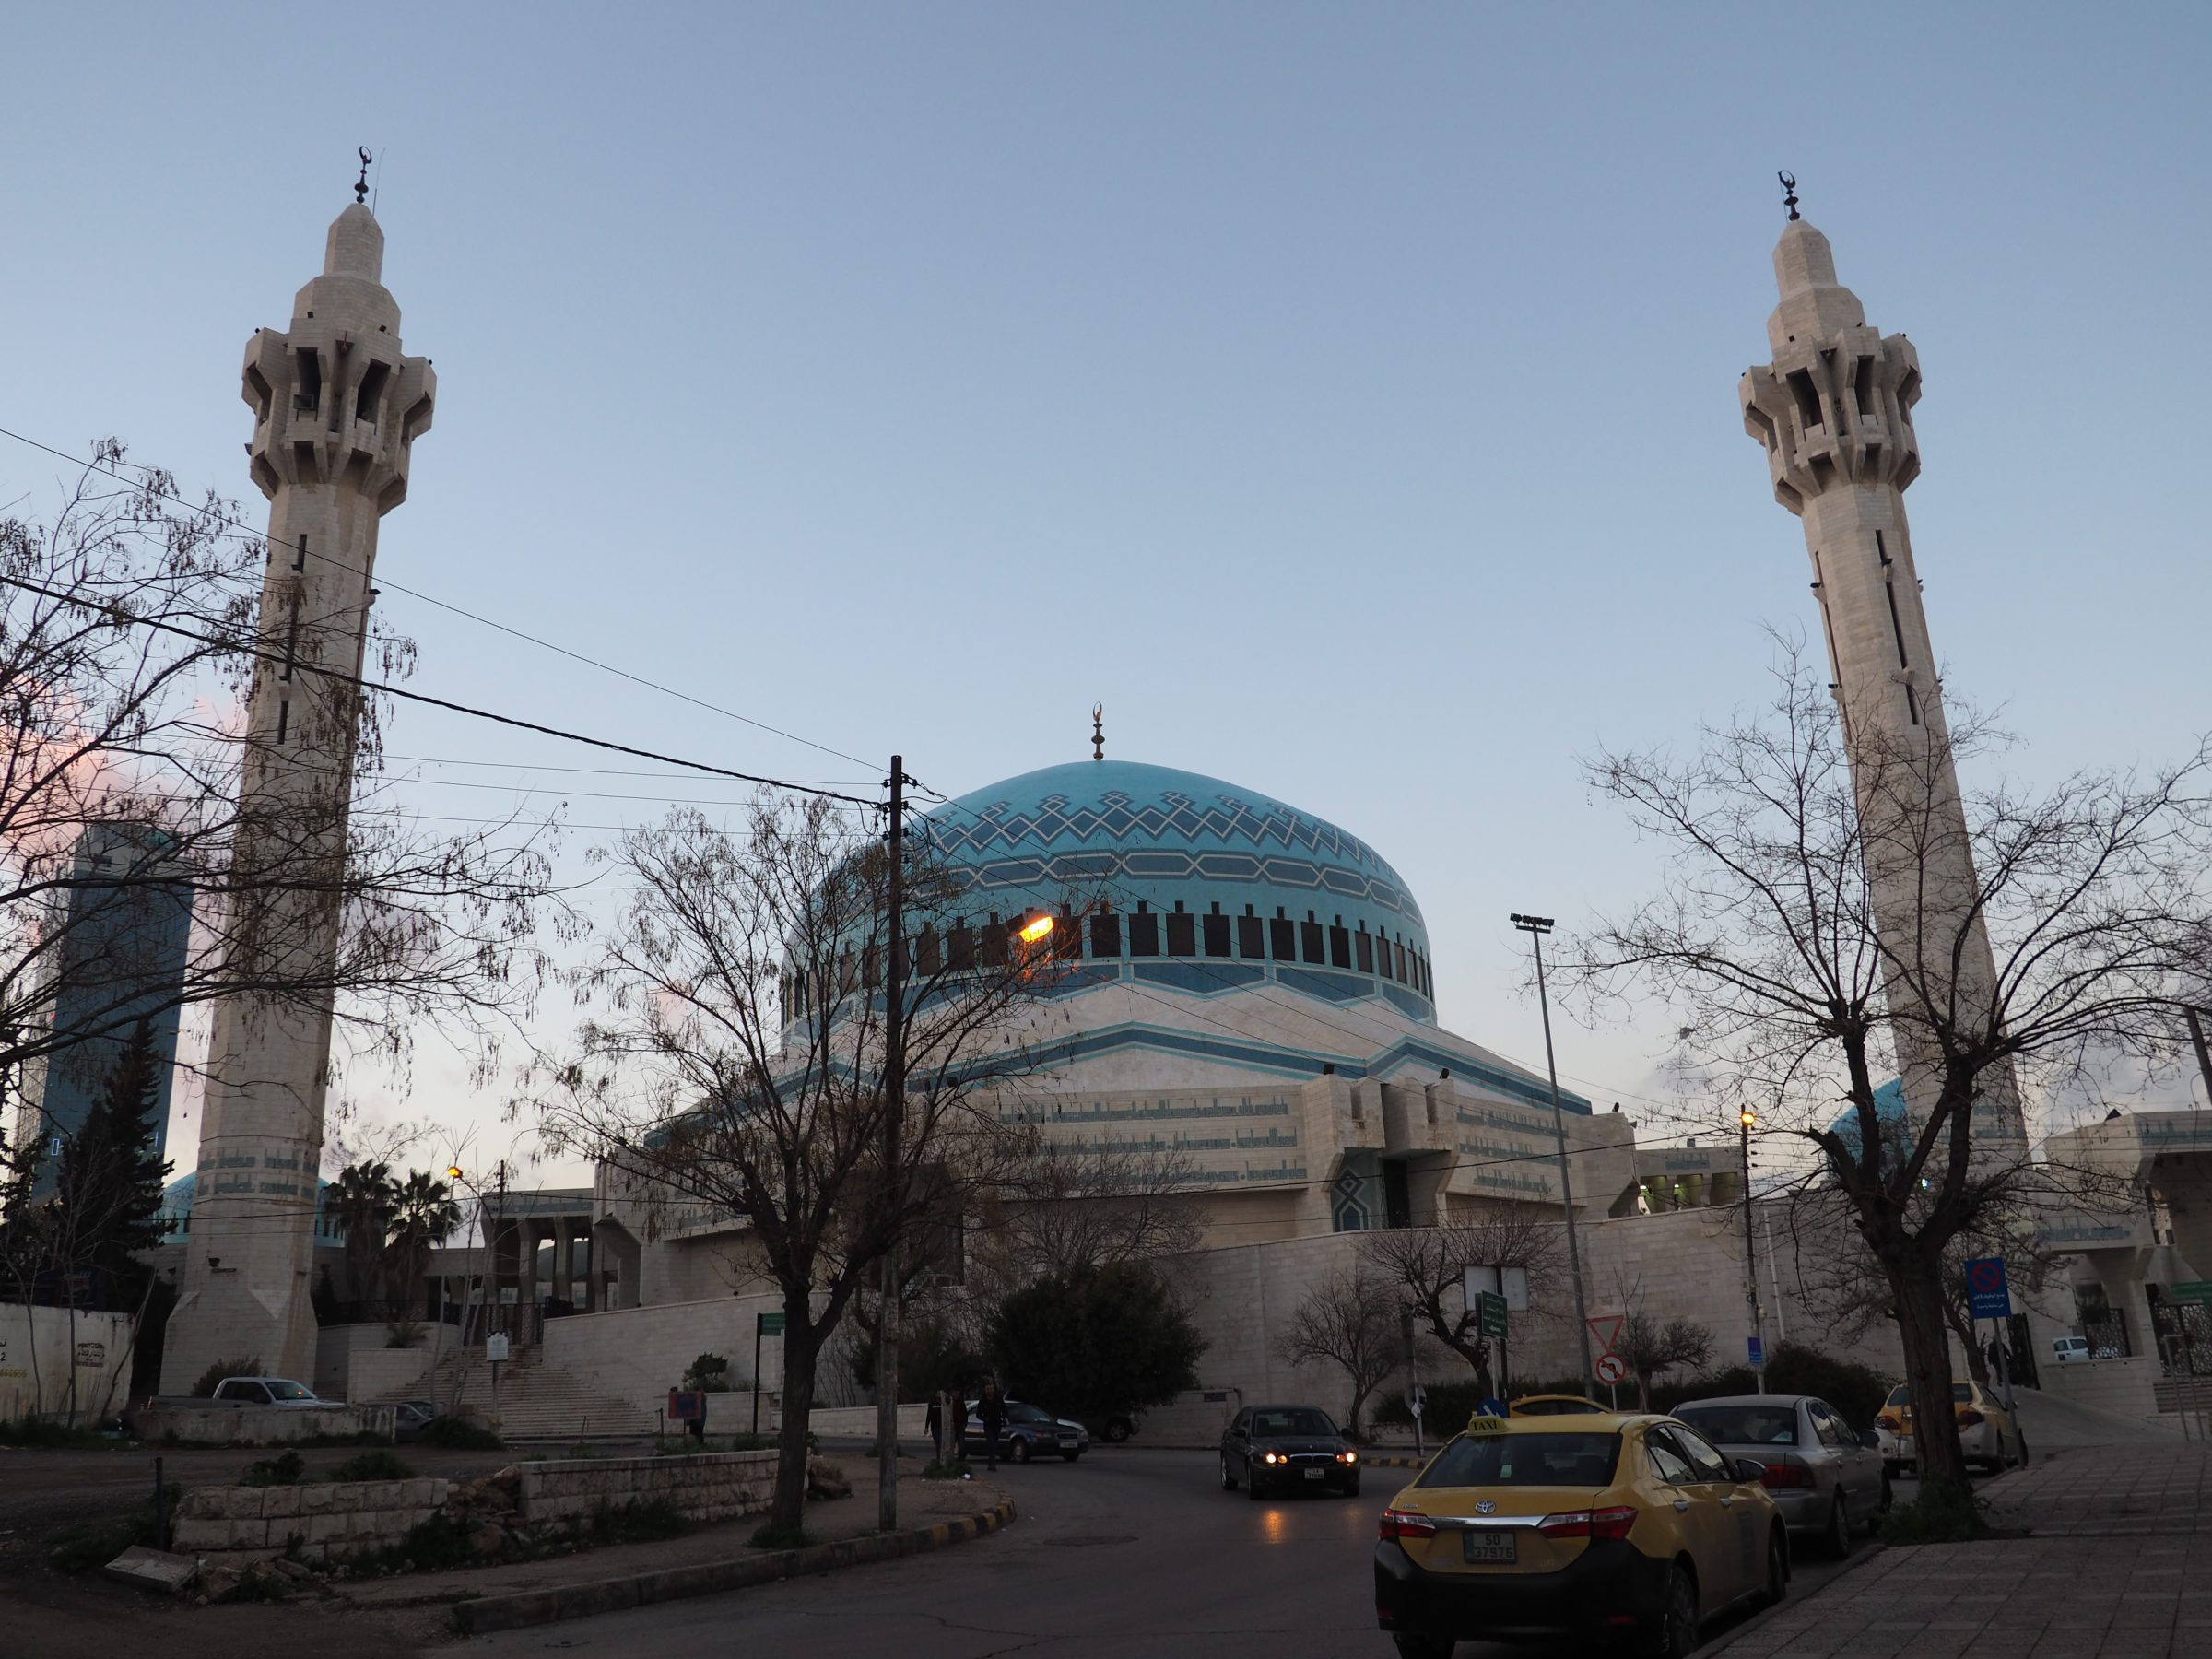 Amman - The Blue Mosque